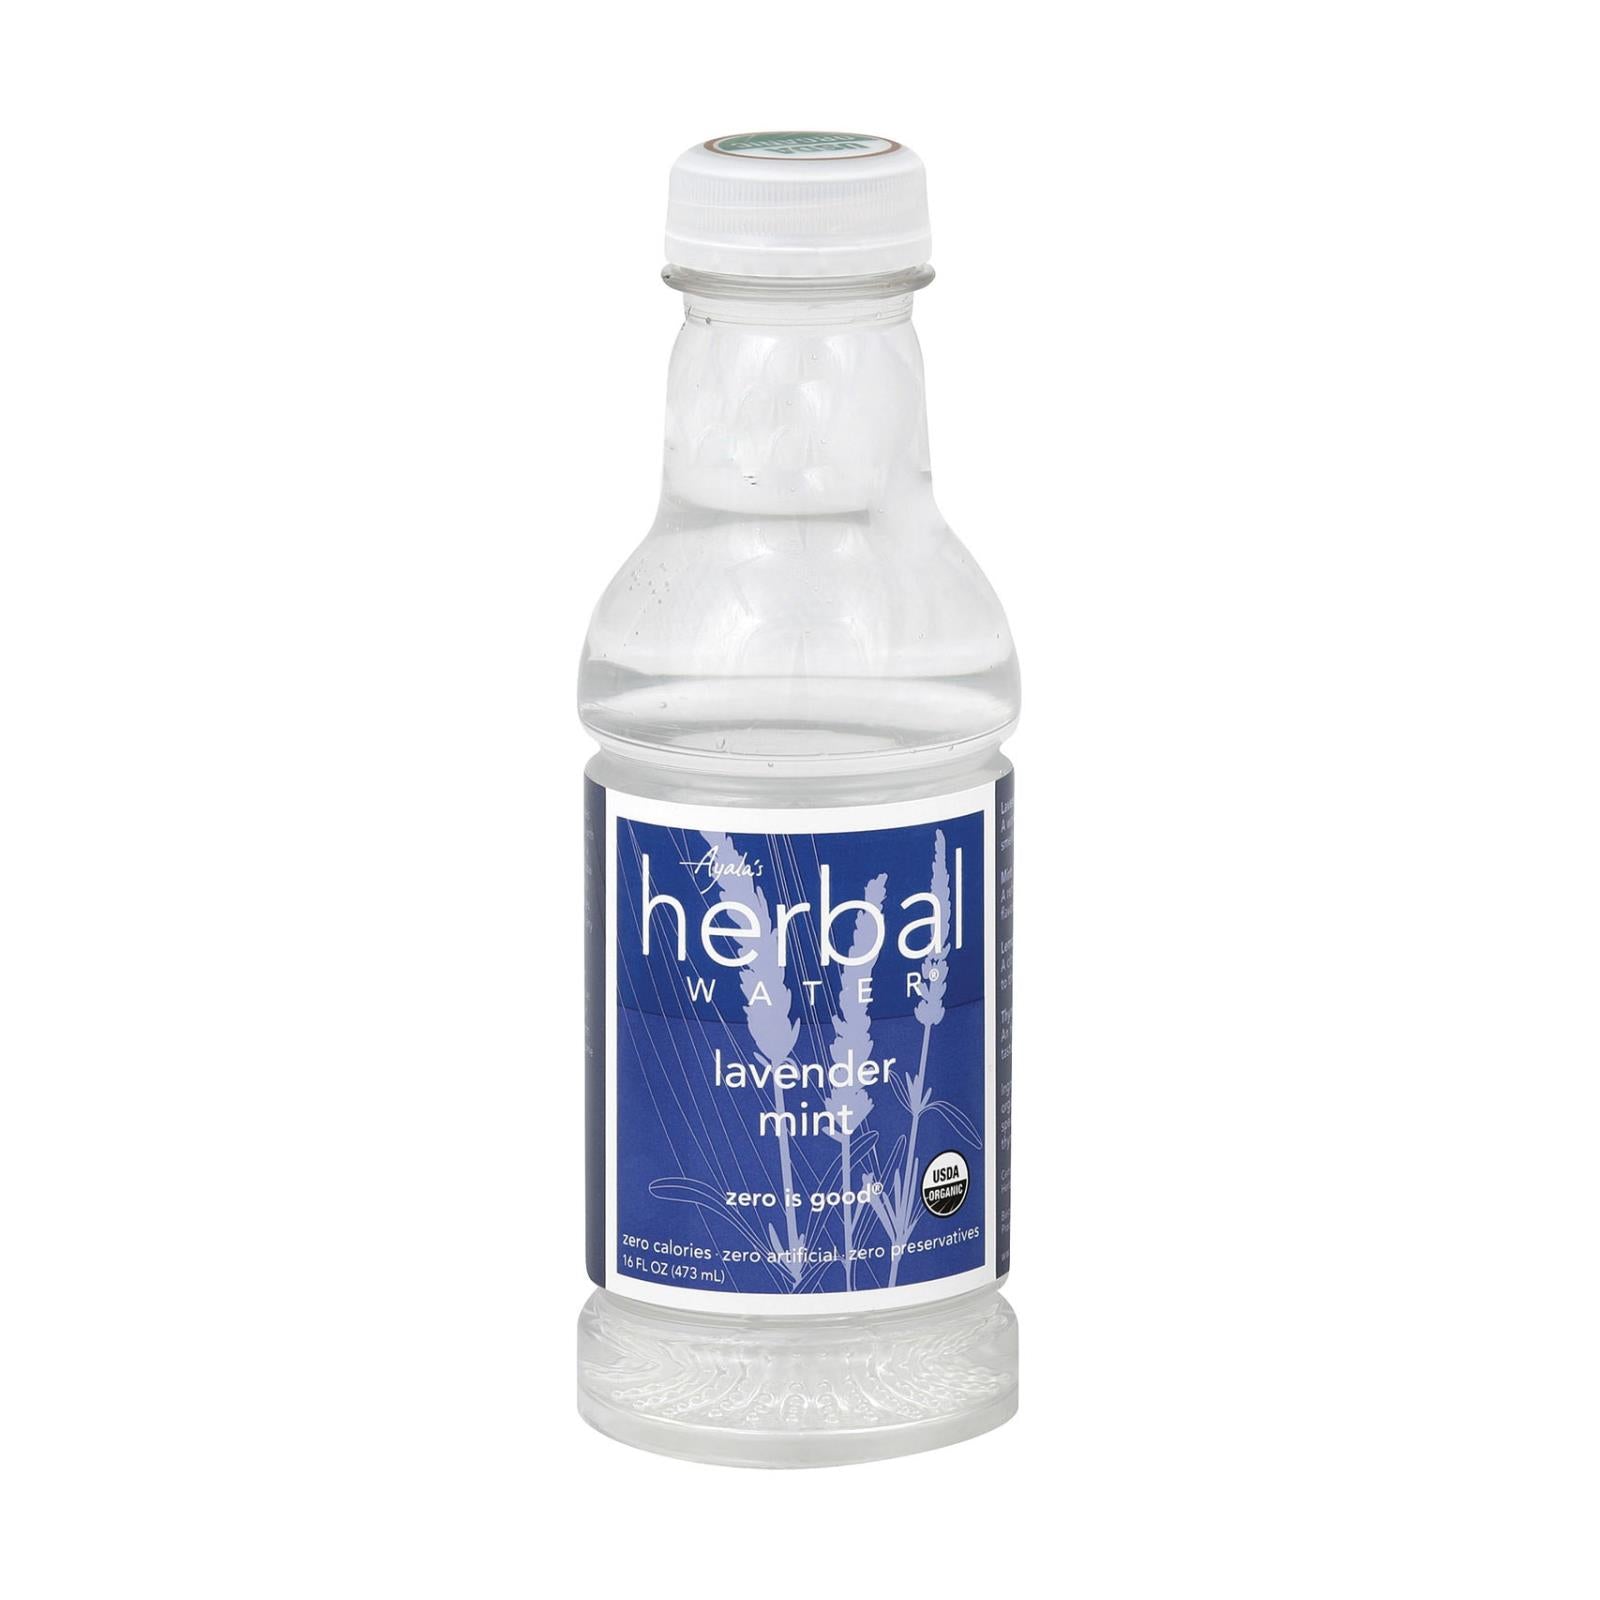 Ayala'S, Ayala's Herbal Water - Still Lavender Mint - Case of 12 - 16 Fl oz. (Pack of 12)